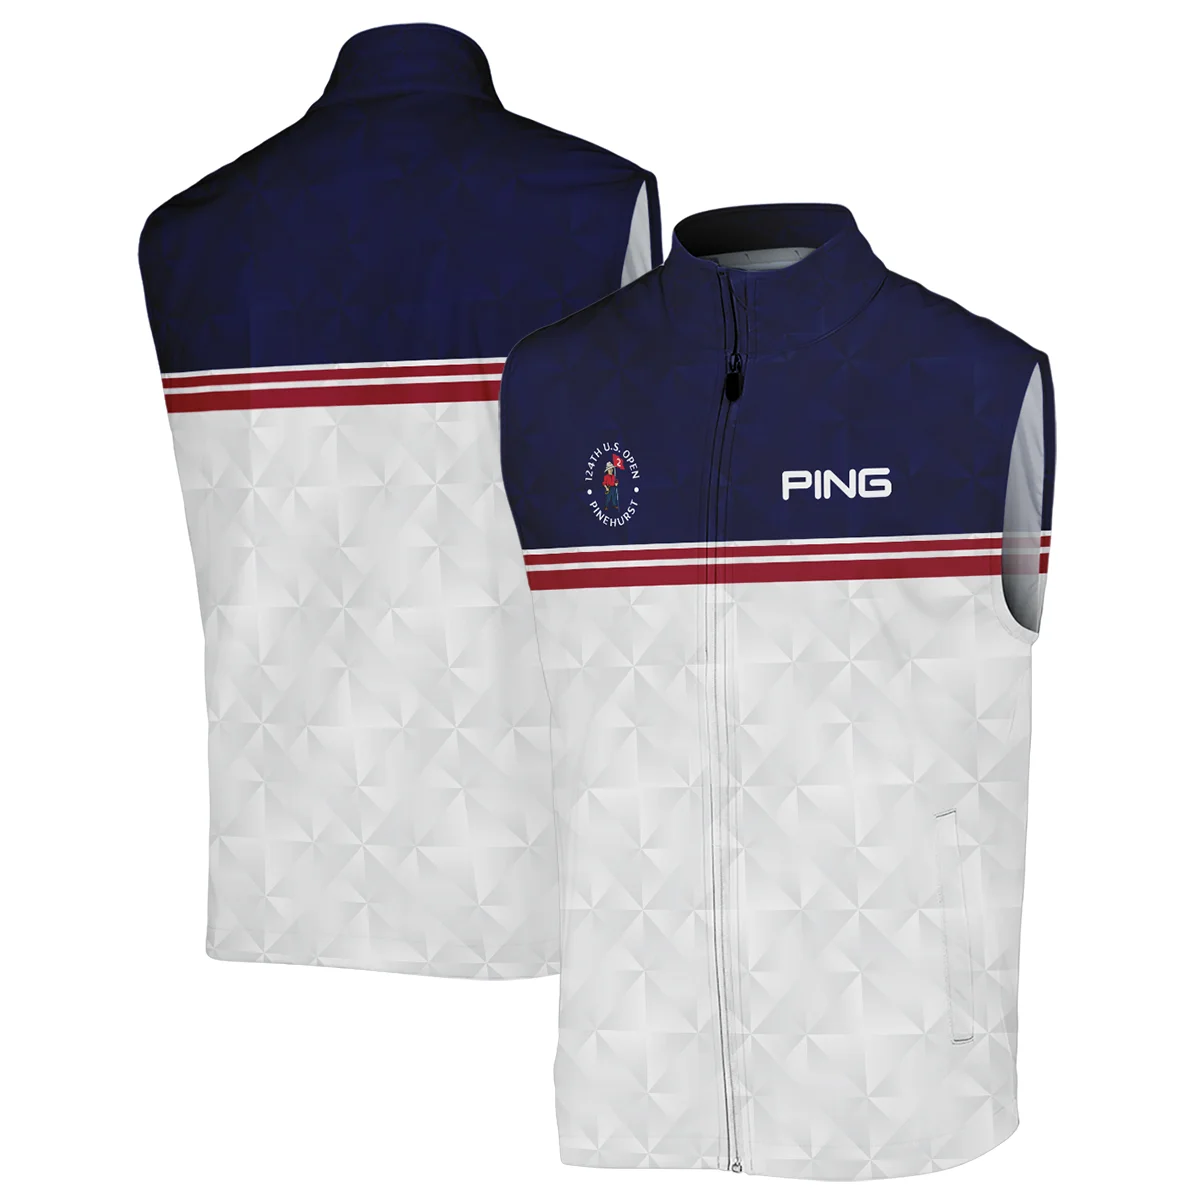 Golf Sport 124th U.S. Open Pinehurst Ping Zipper Hoodie Shirt Dark Blue White Abstract Geometric Triangles All Over Print Zipper Hoodie Shirt